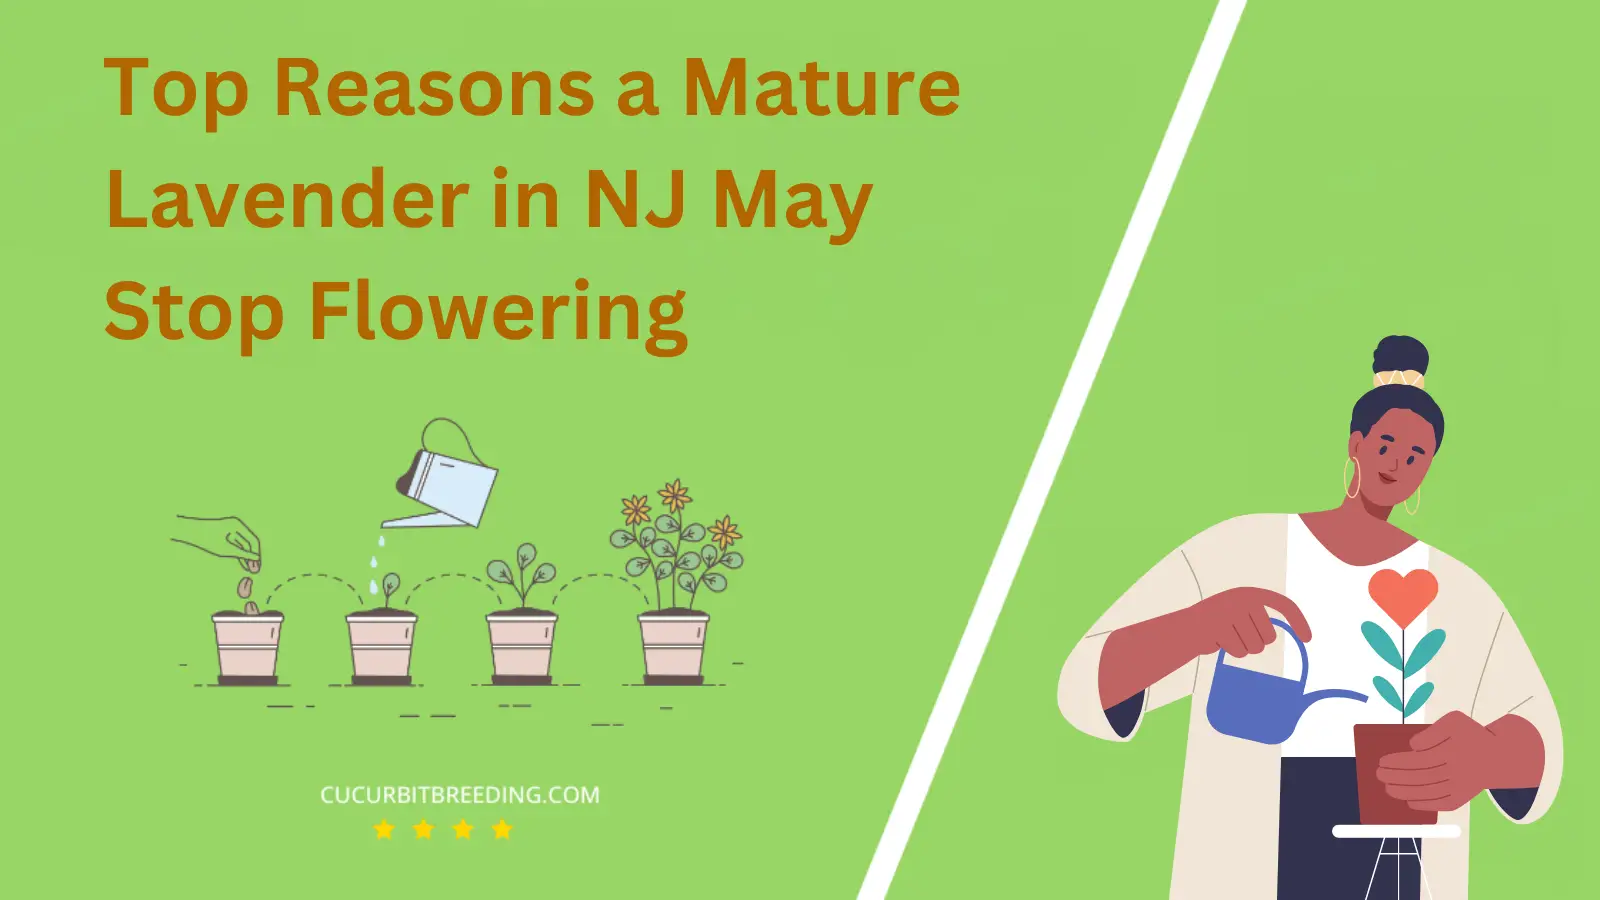 Top Reasons a Mature Lavender in NJ May Stop Flowering